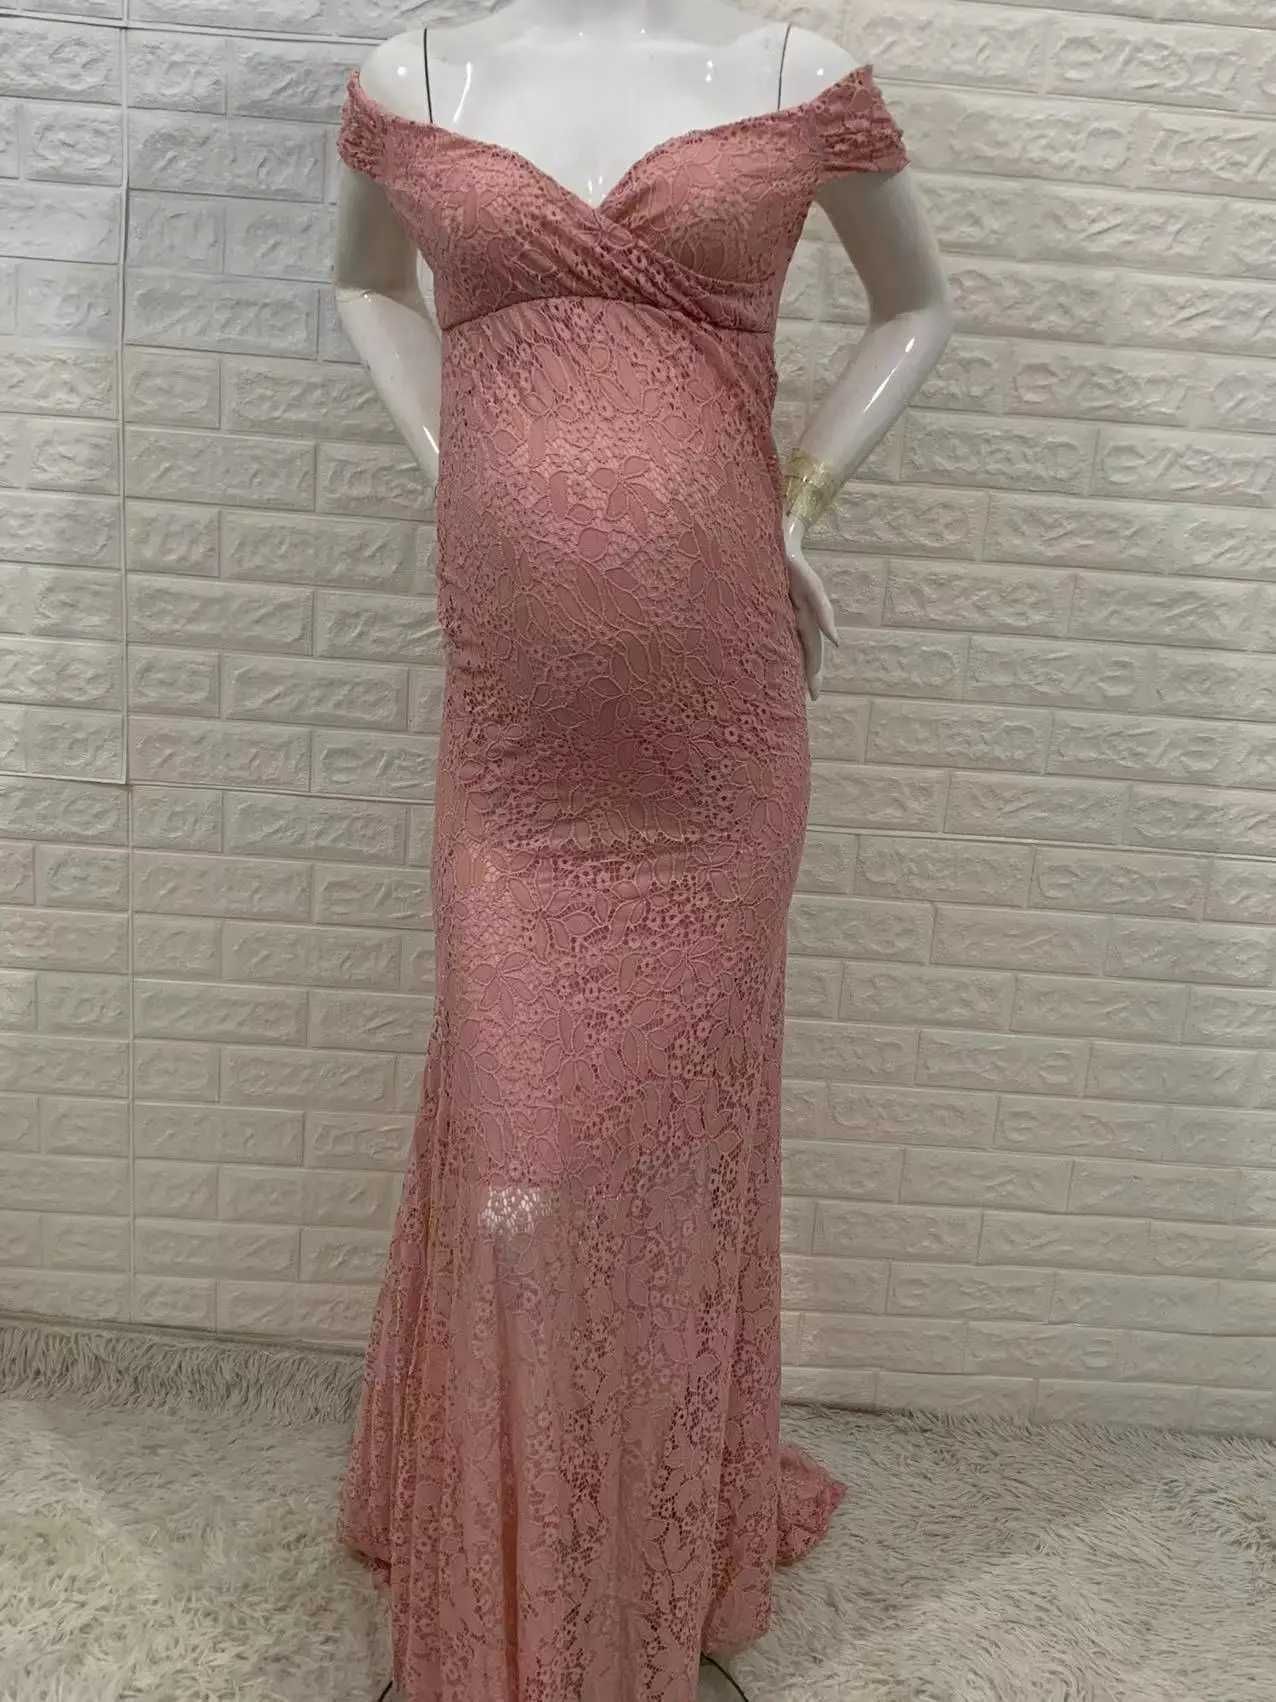 1 x Pink Dress